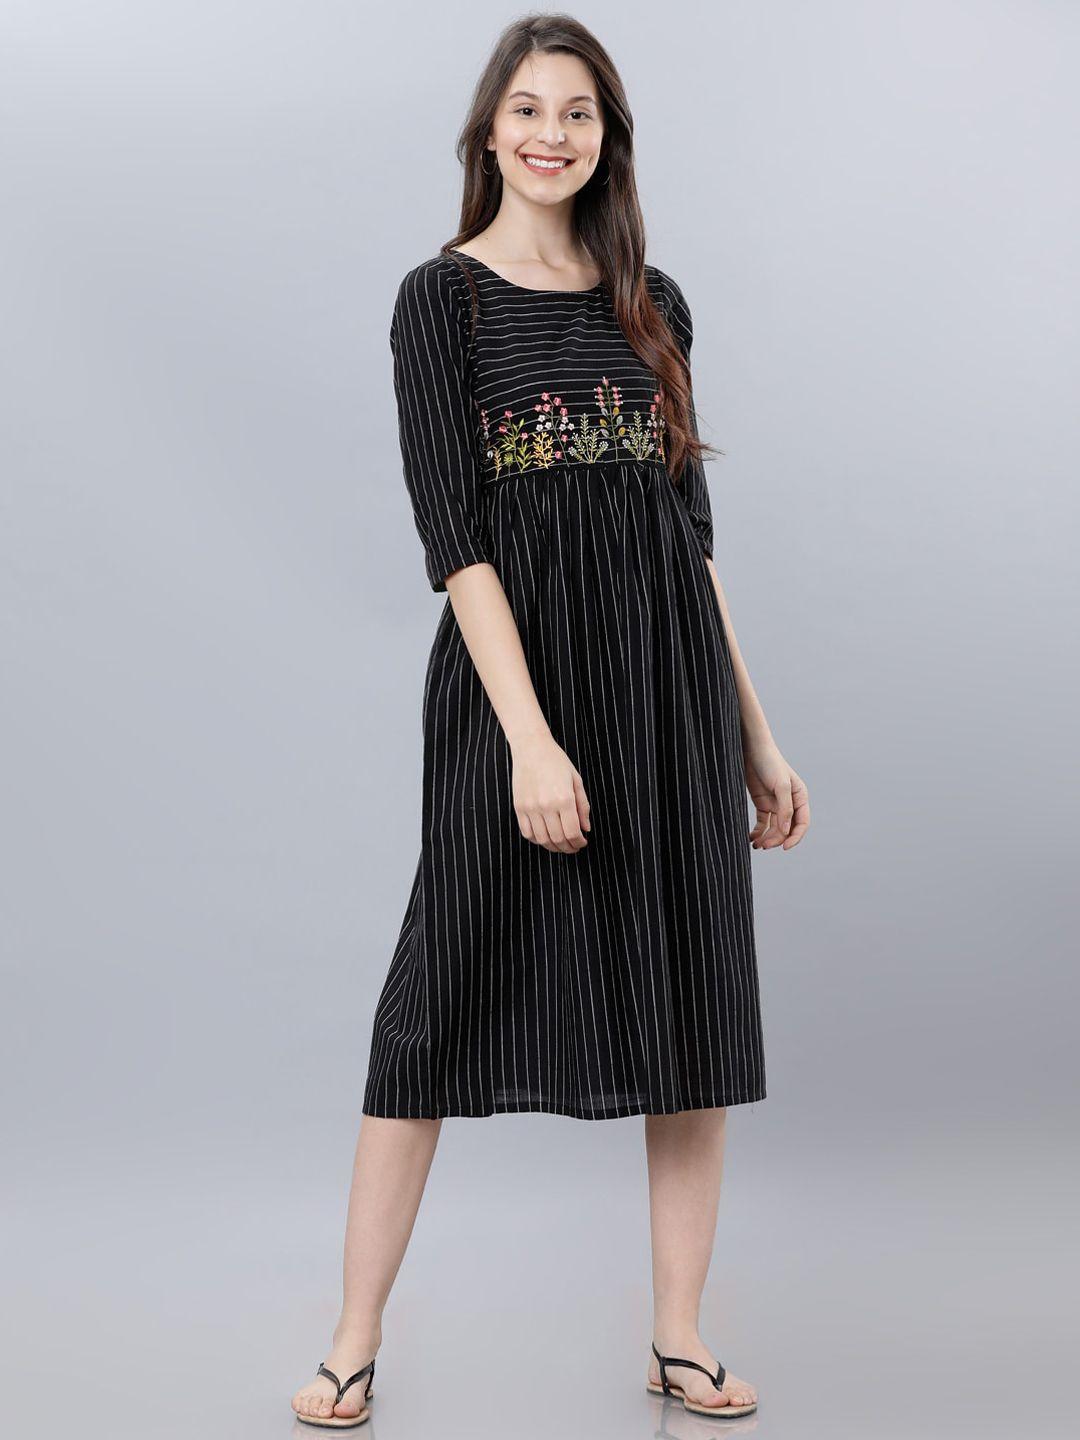 vishudh-women-black-striped-empire-dress